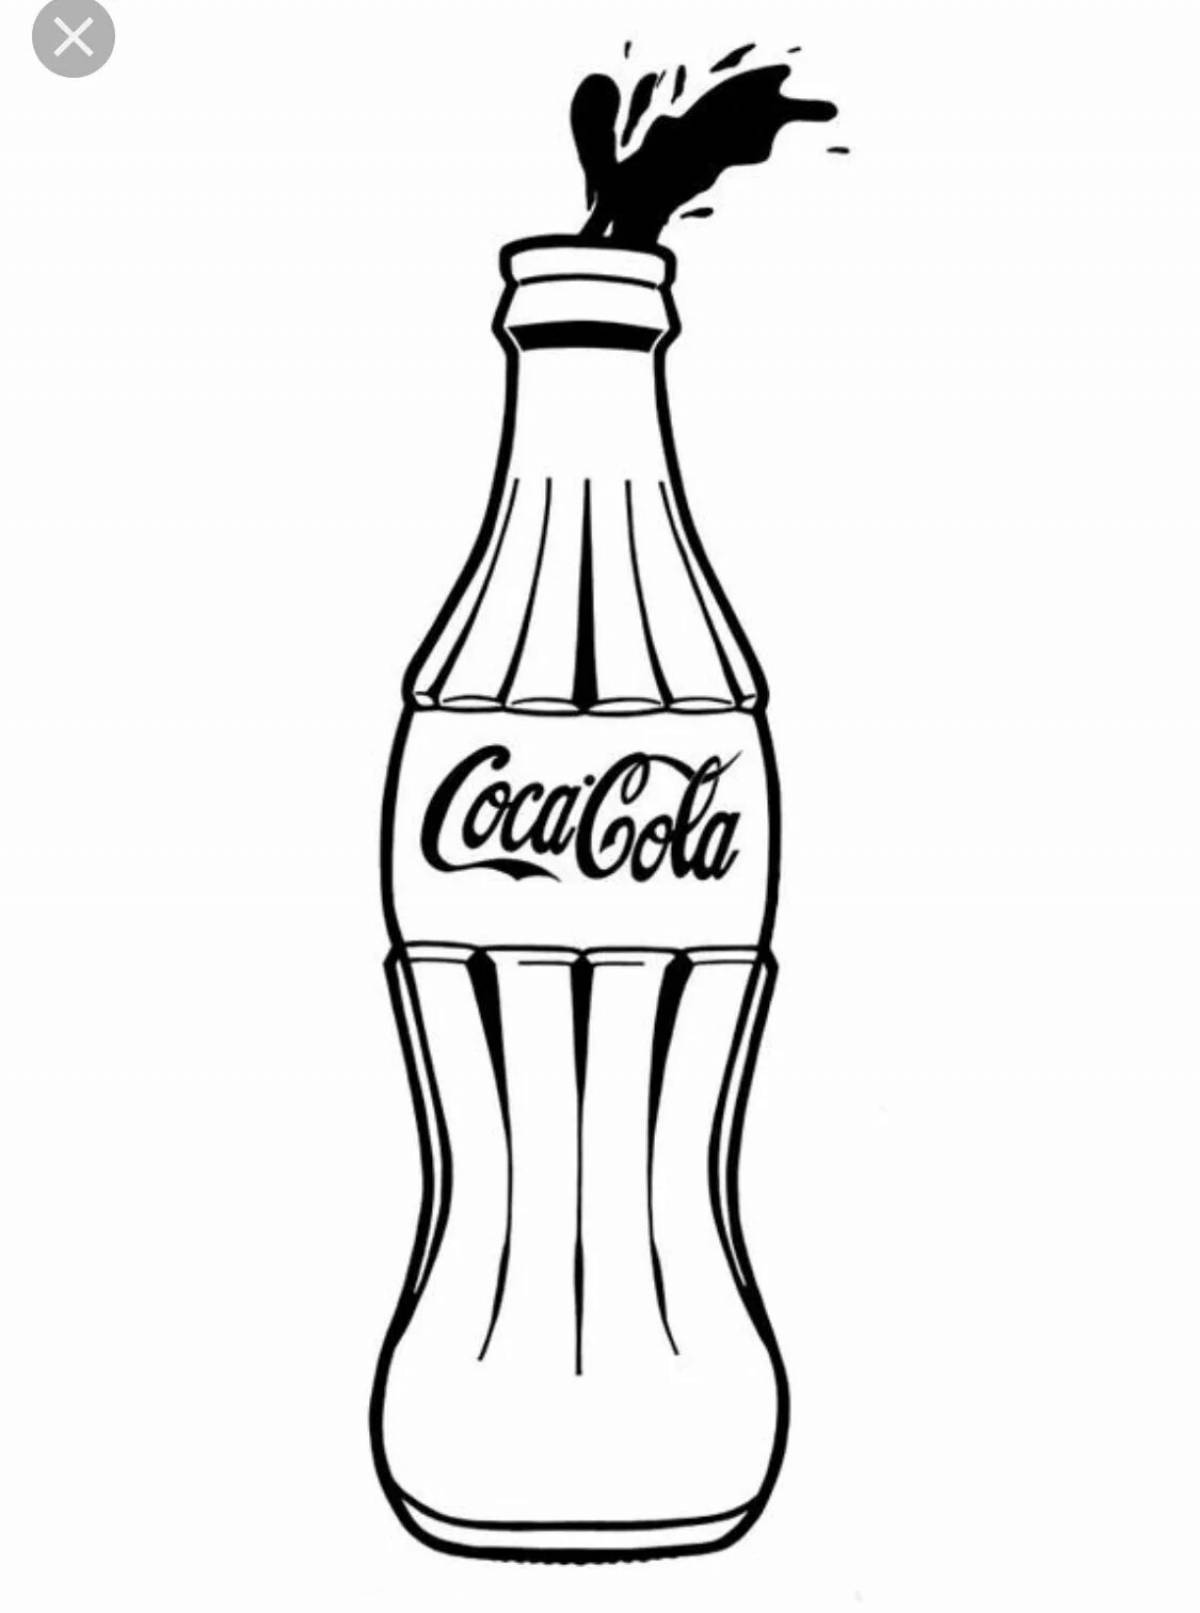 Coca cola #5